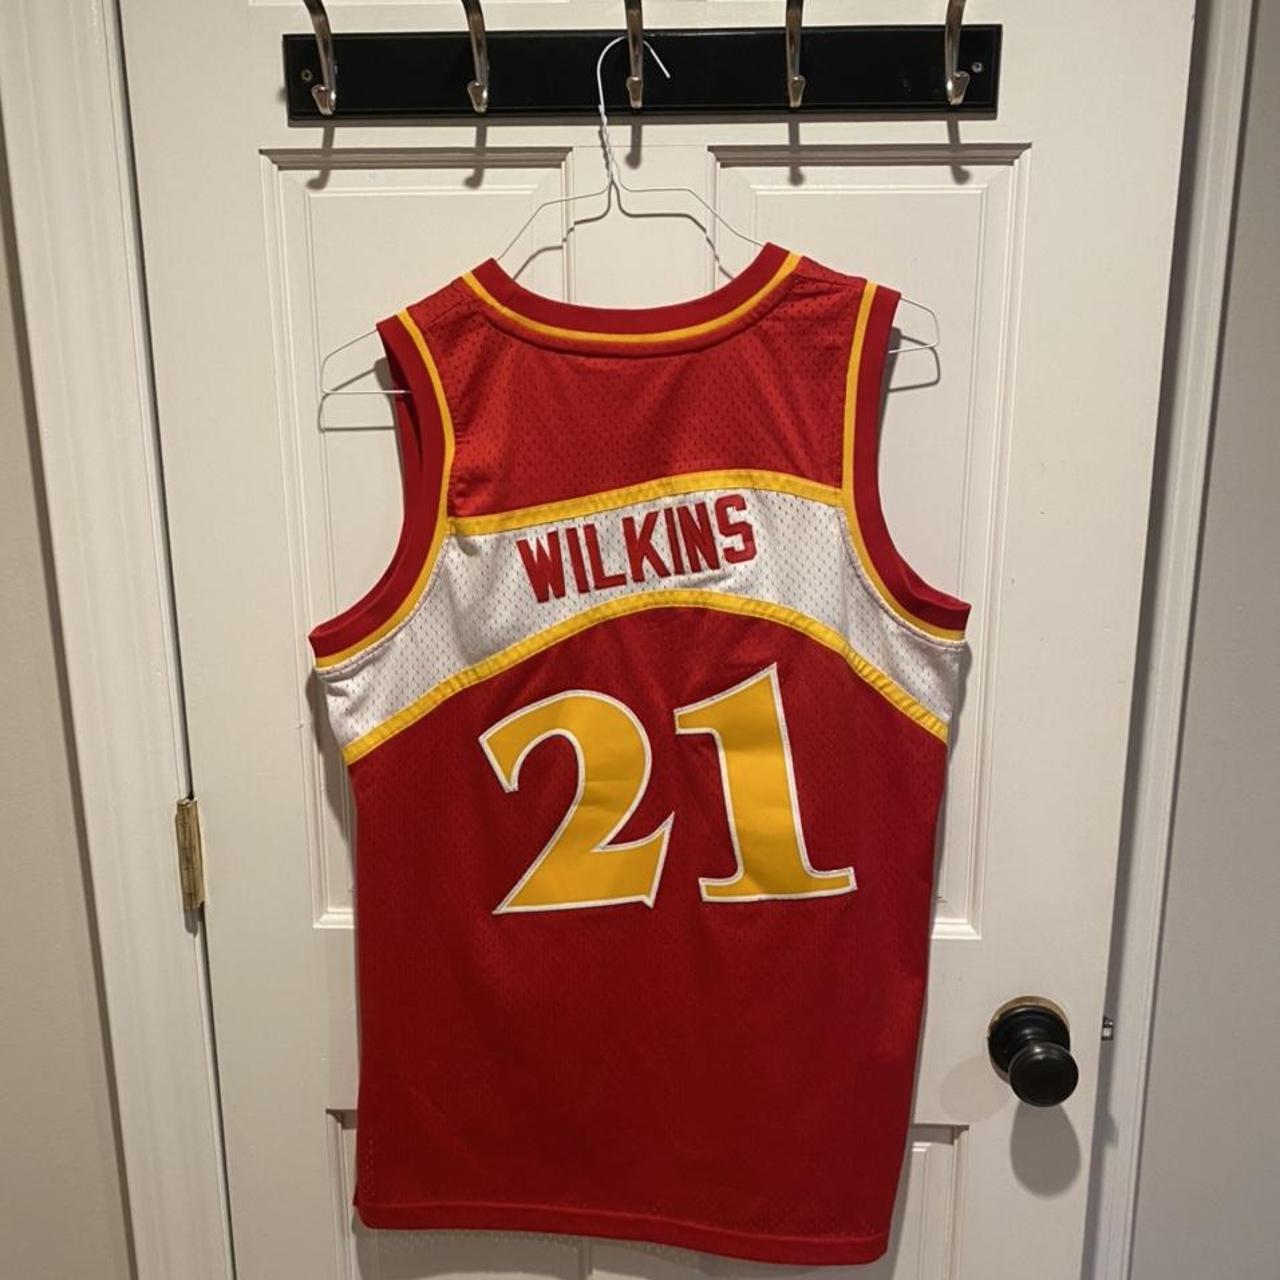 Product Image 2 - Dominique Wilkins jersey
Atlanta Hawks
Size -